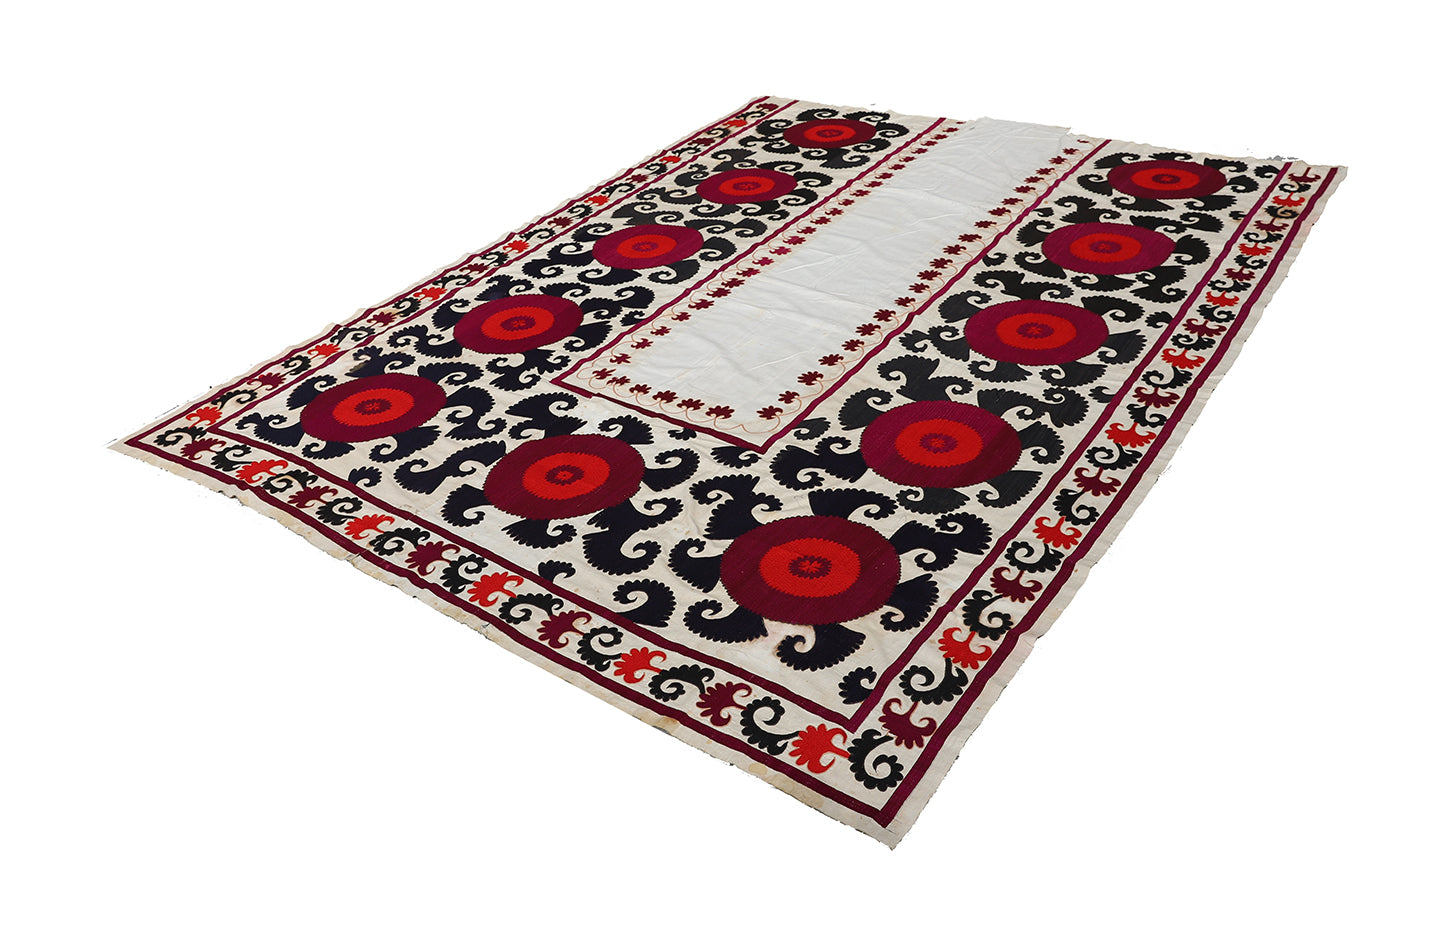 6'x8' White Uzbek Textile Door Cover